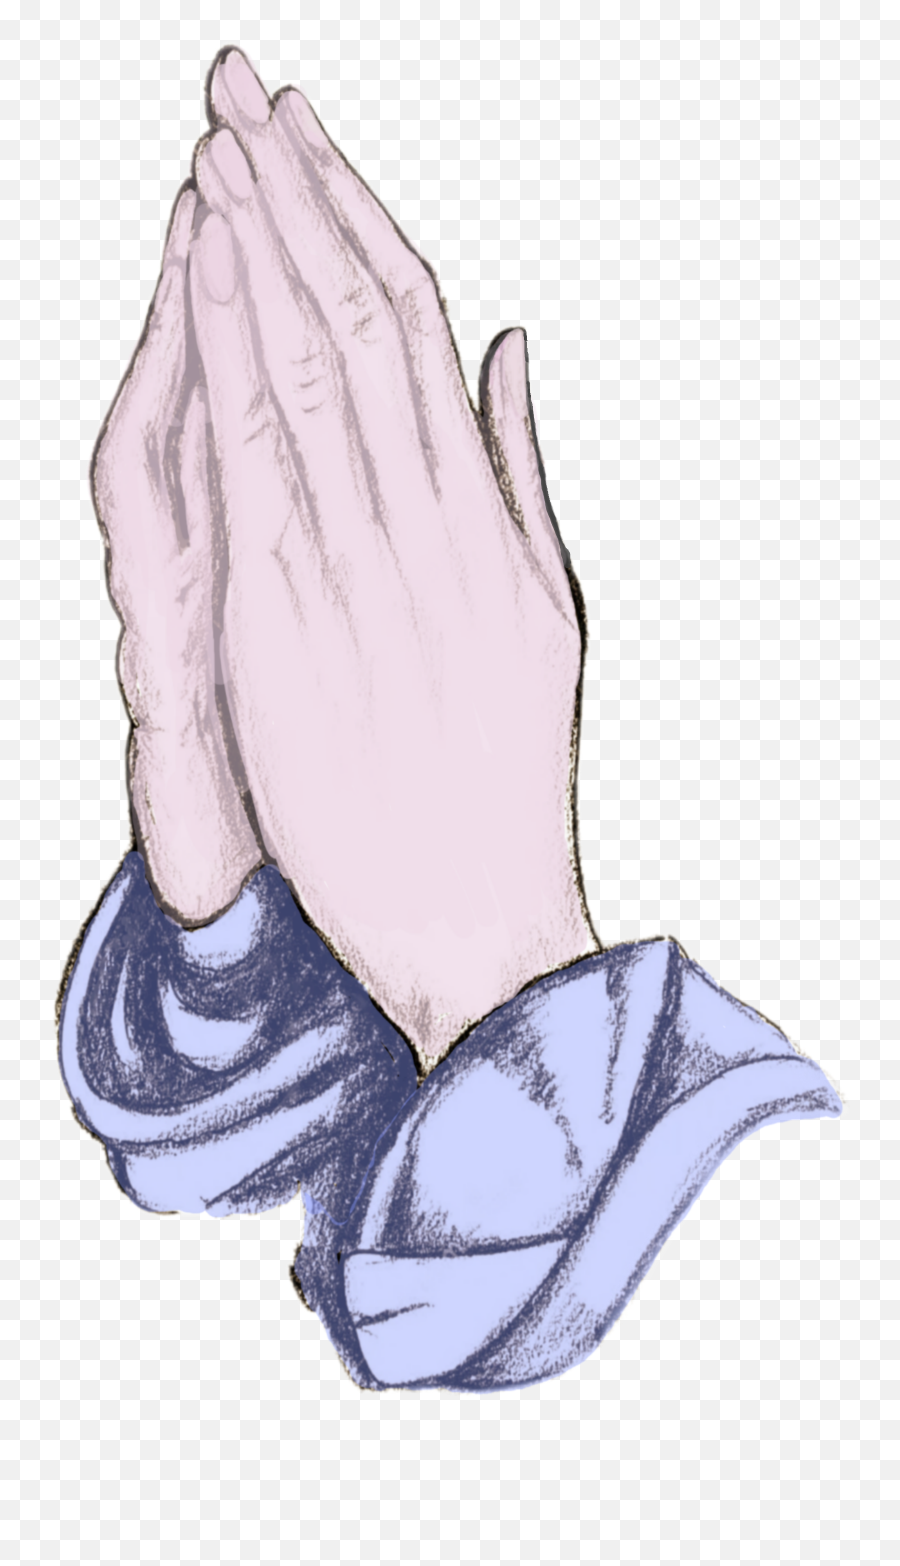 The Most Edited Prayinghands Picsart Emoji,Praying Hands Emoticon On Facebook